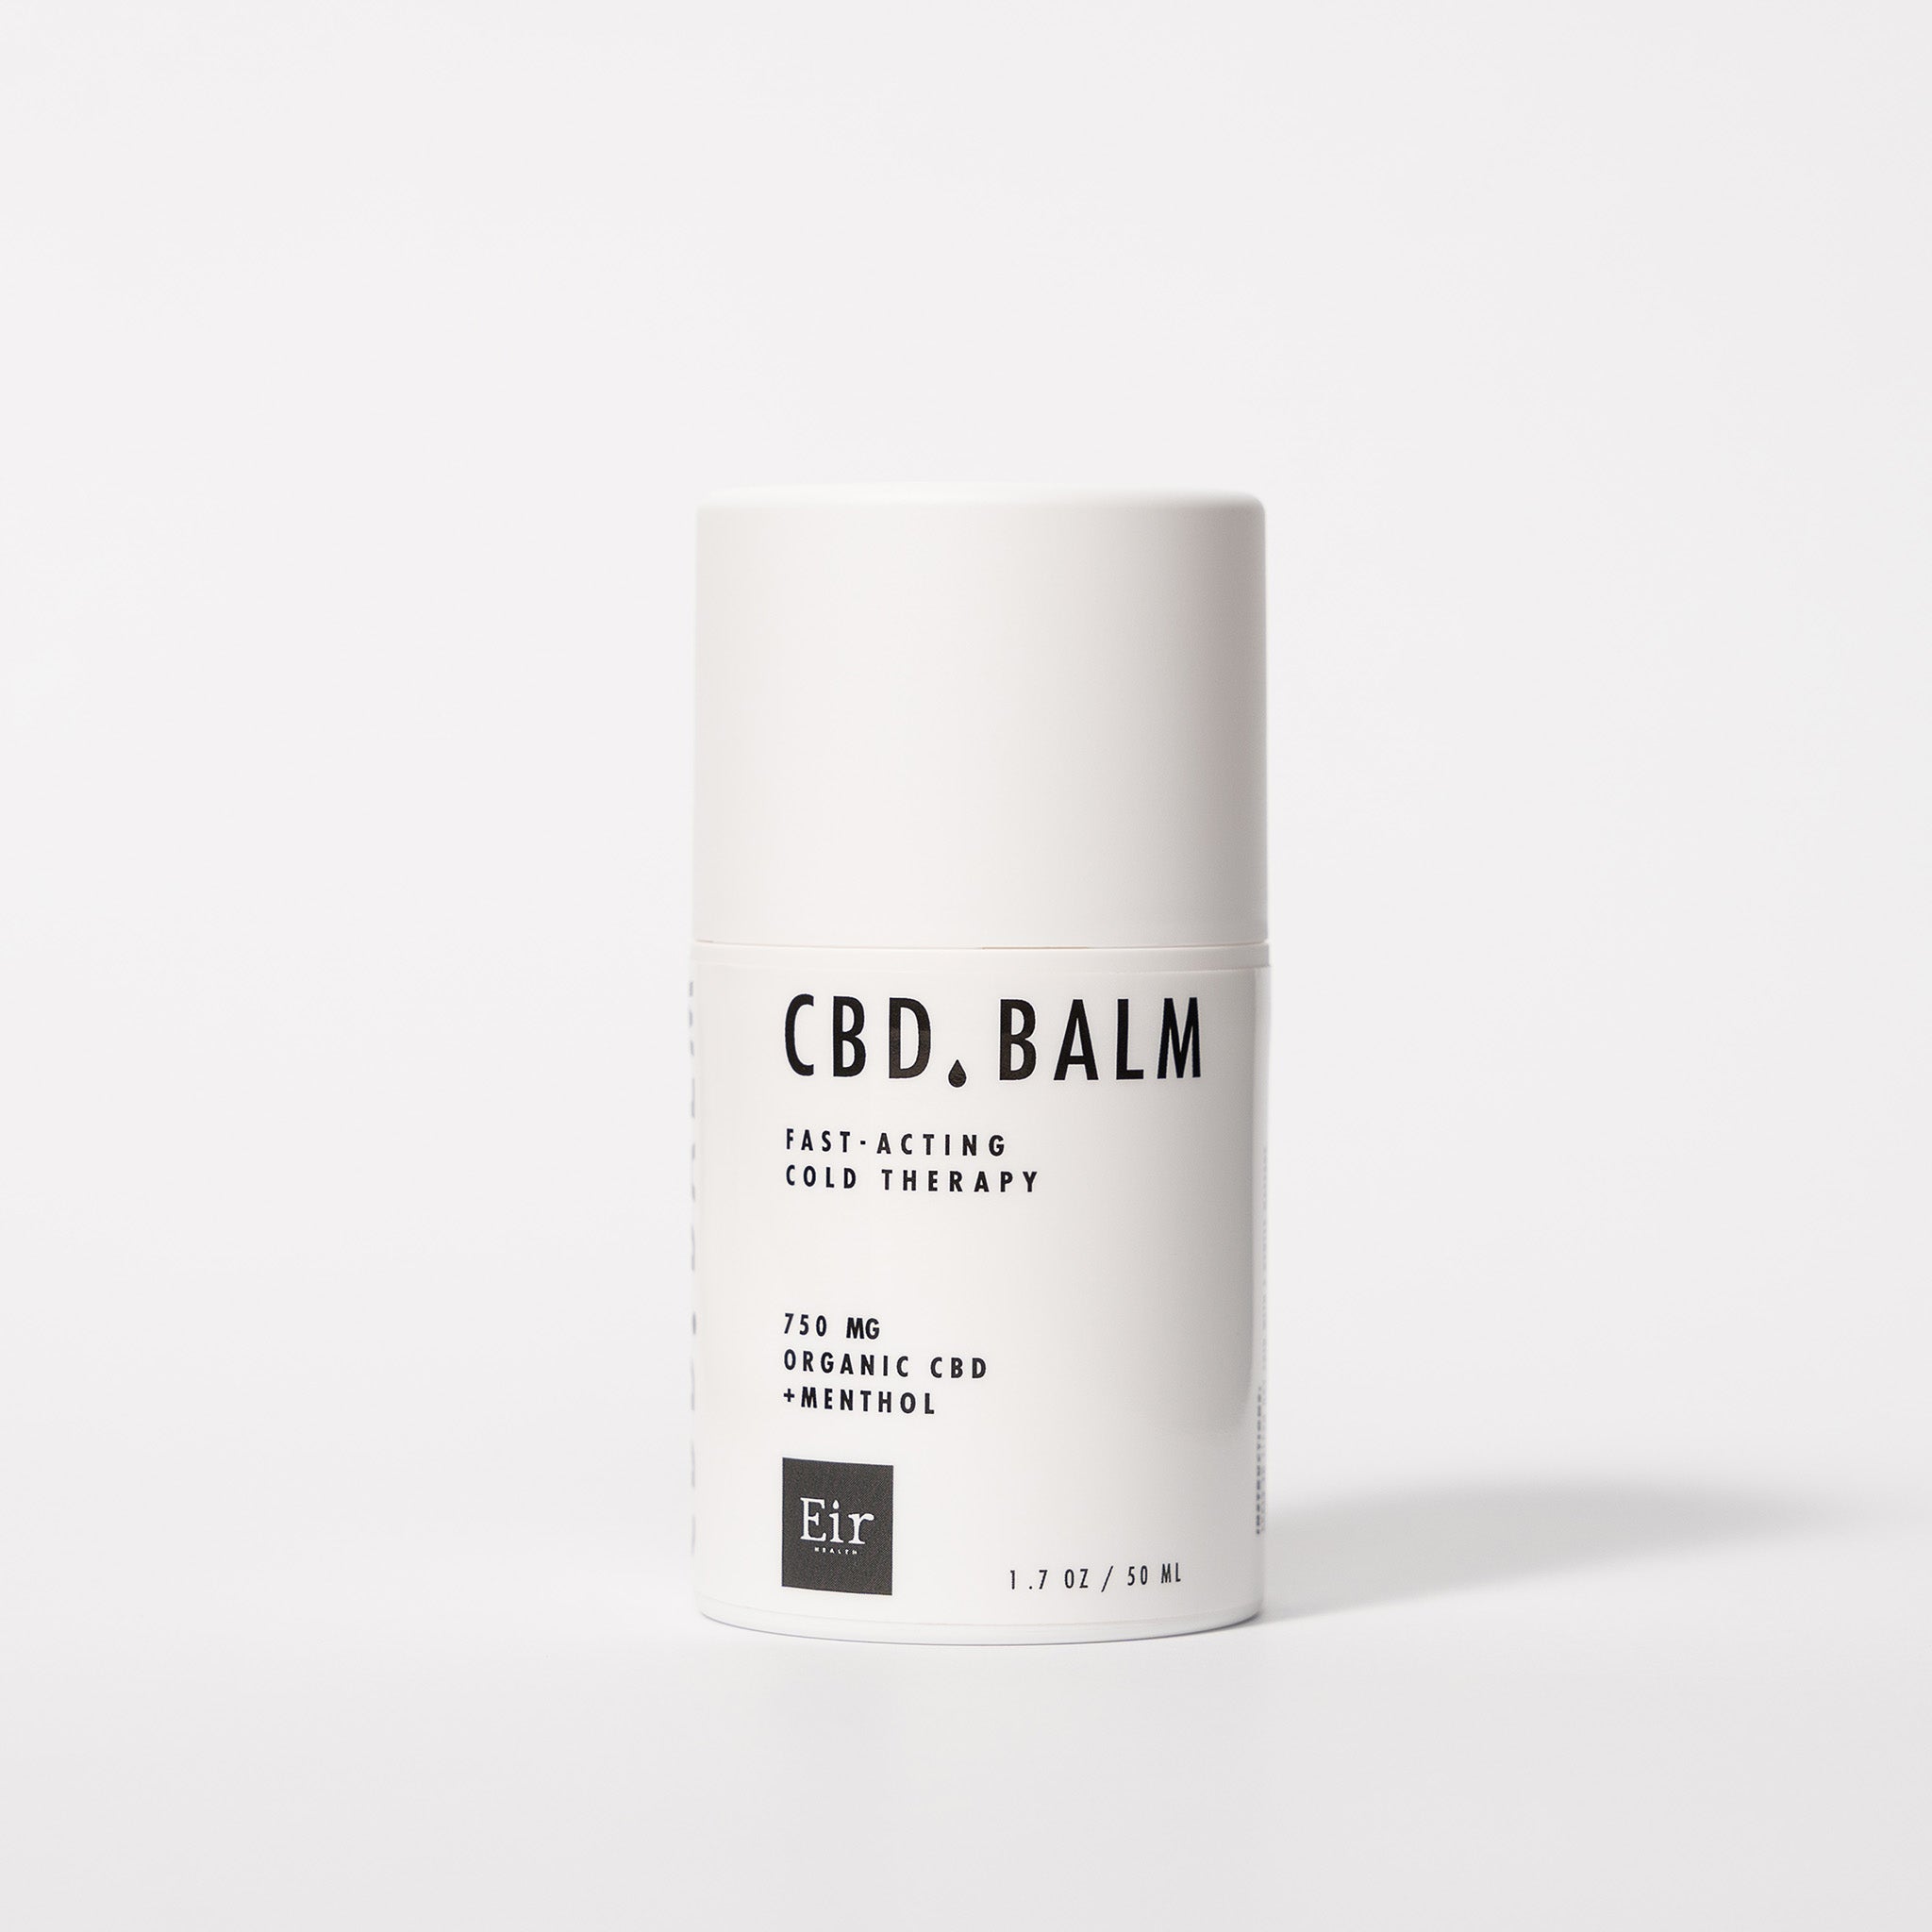 CBD BALM - Fast Acting Cold Therapy CBD Balm